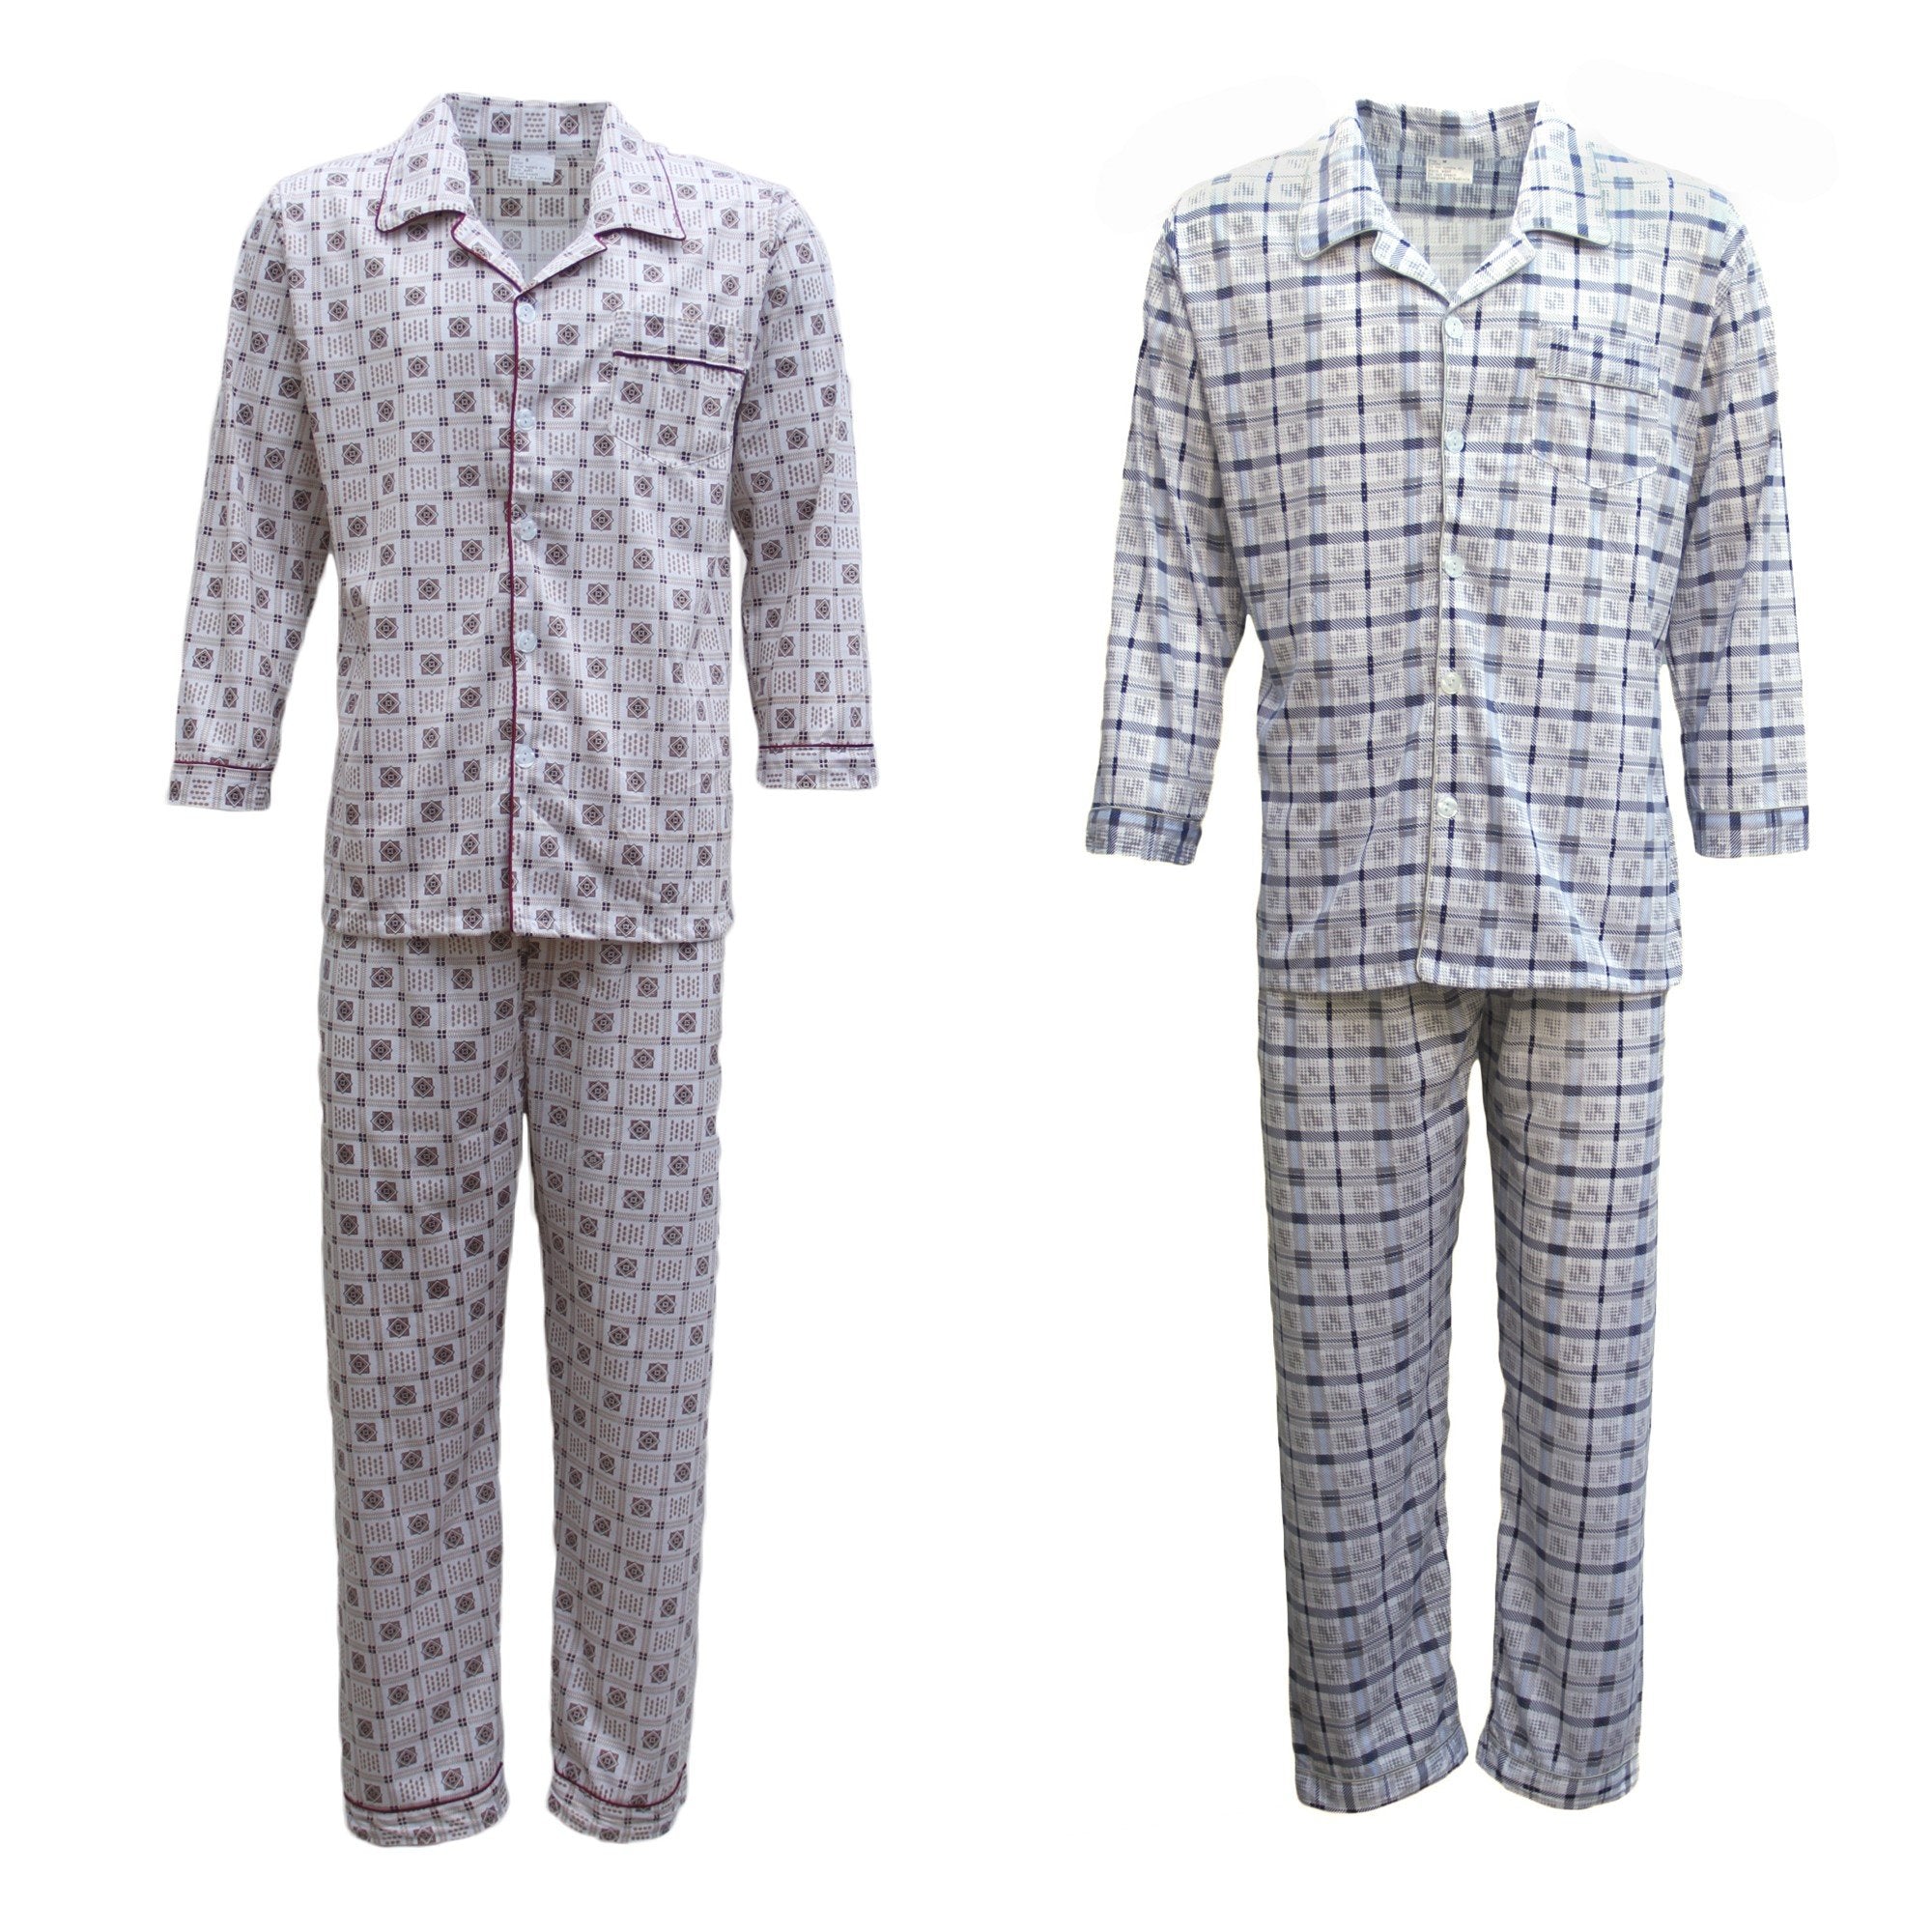 New Mens Cotton Pajamas Pyjamas PJs Set Long Sleeve Shirt Tops + Pants Sleepwear - Zmart Australia